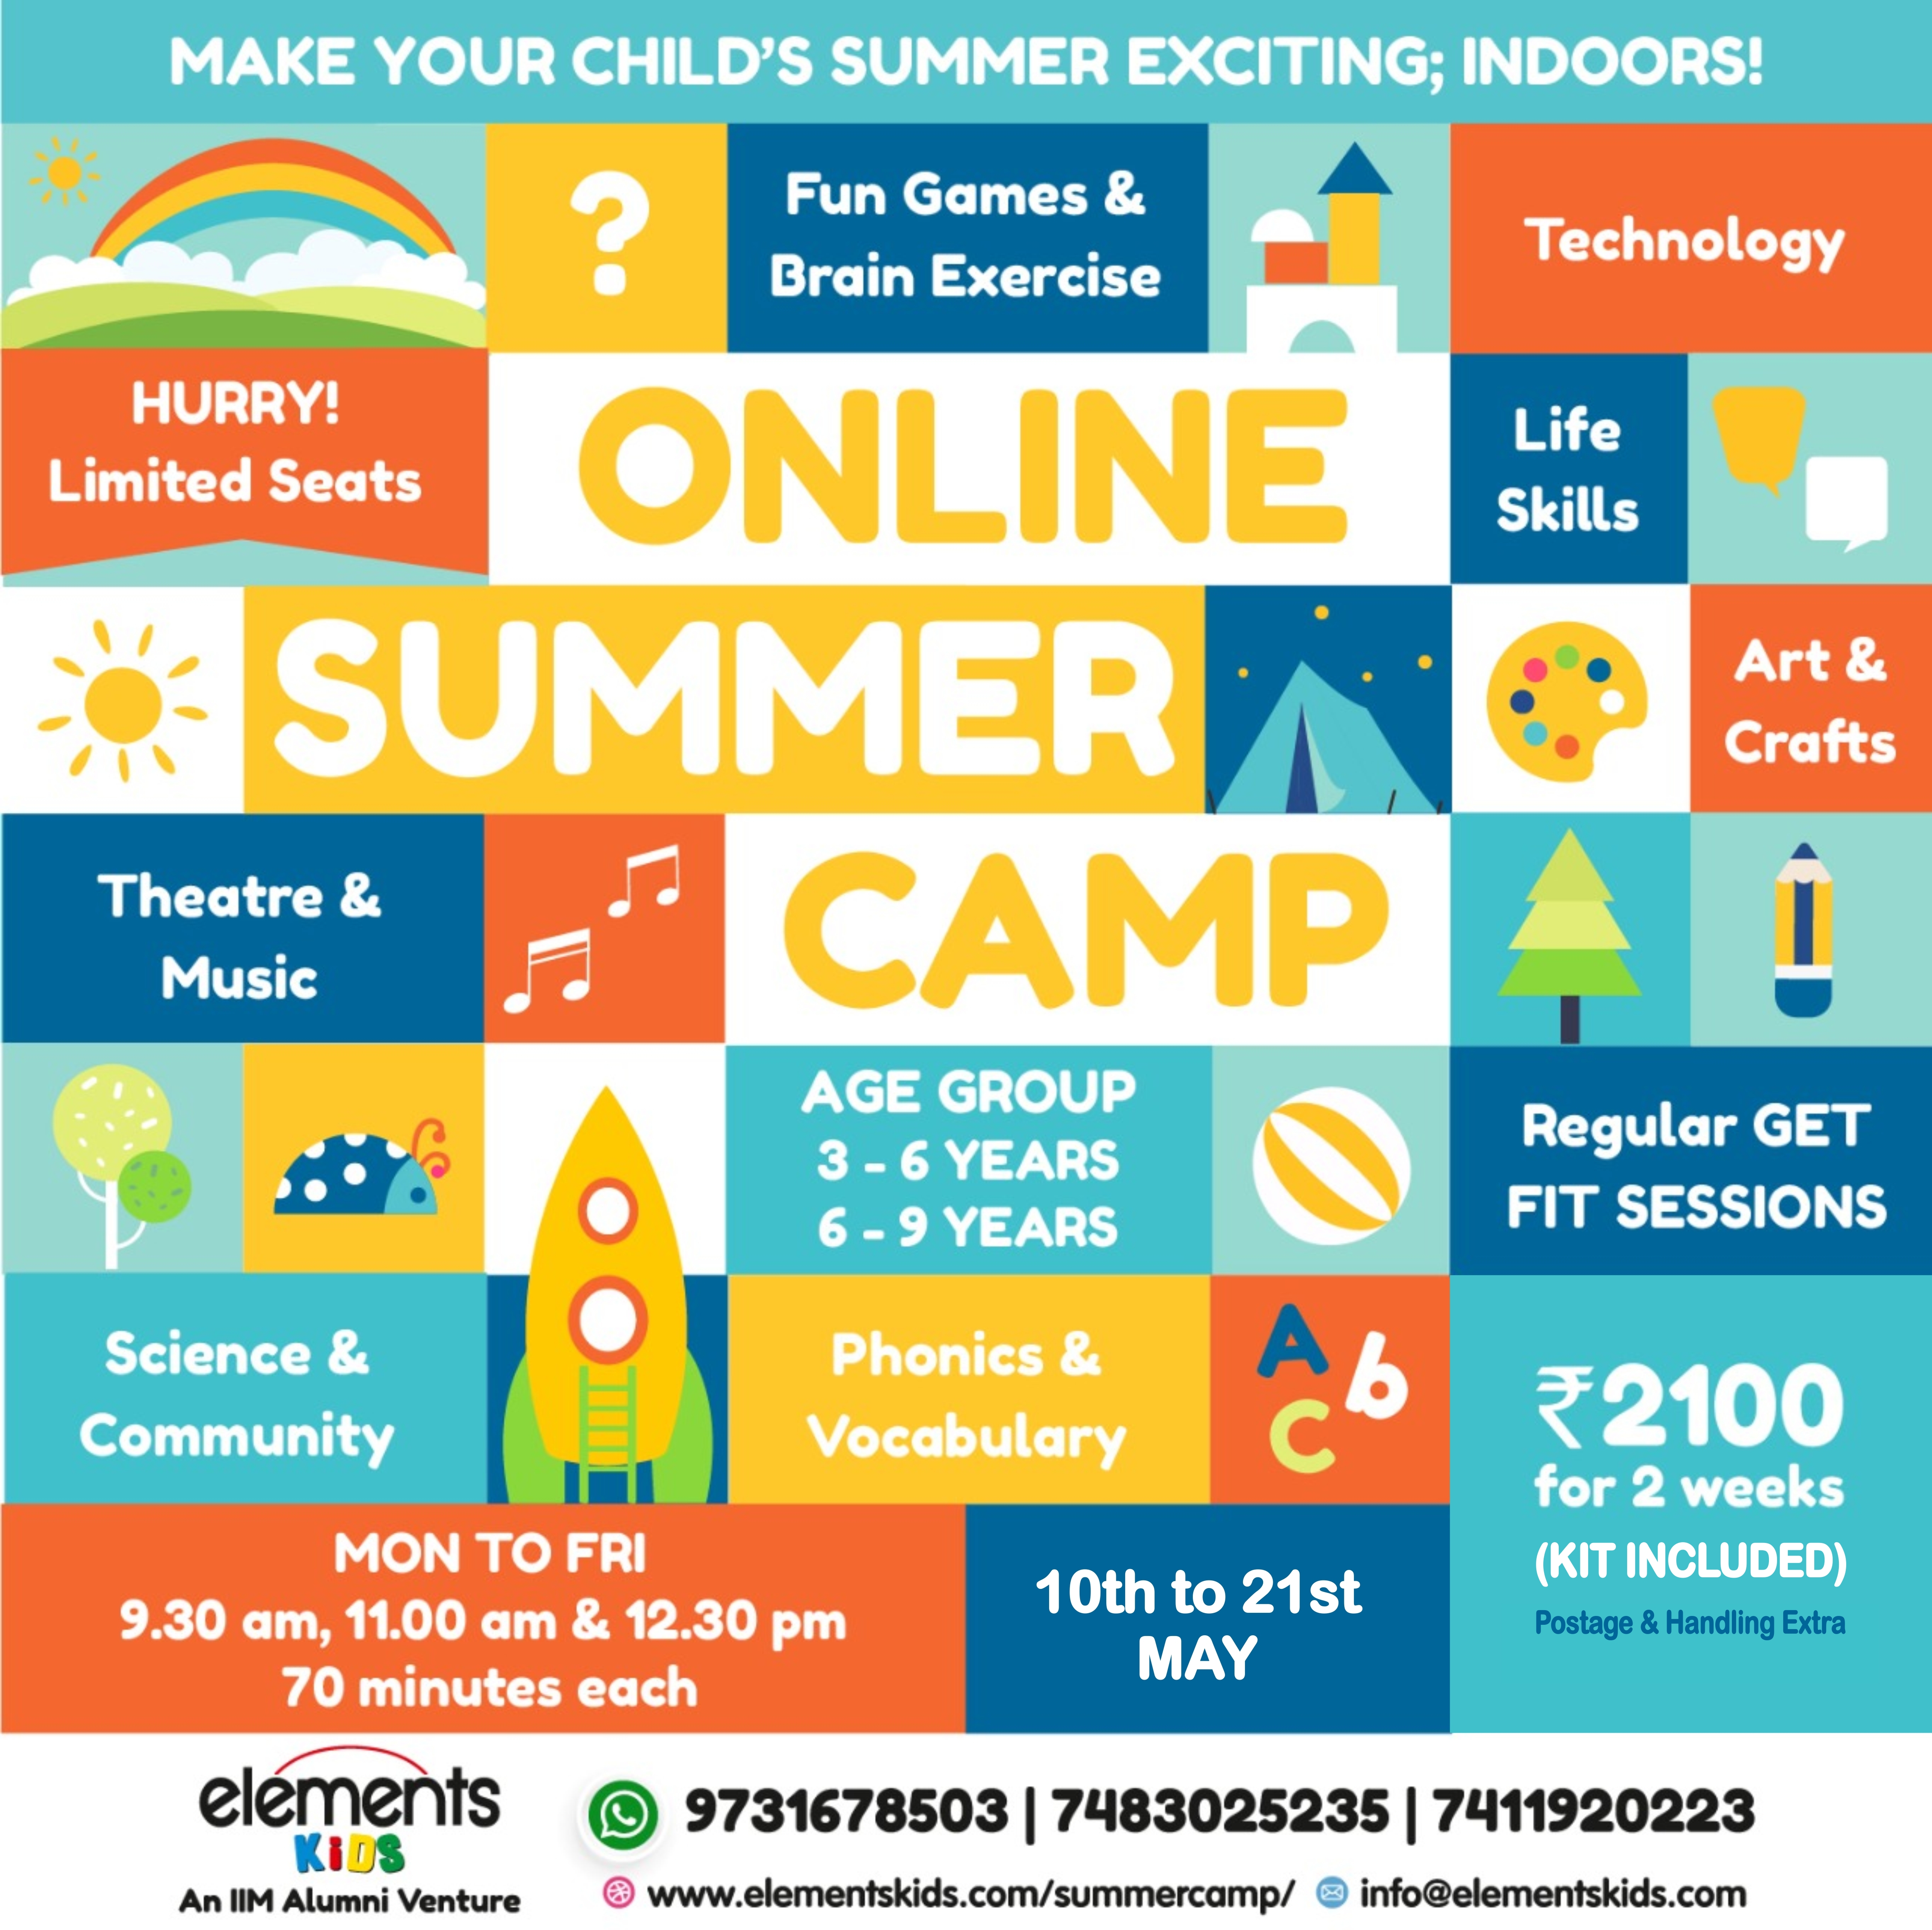 Virtual Summer Camp